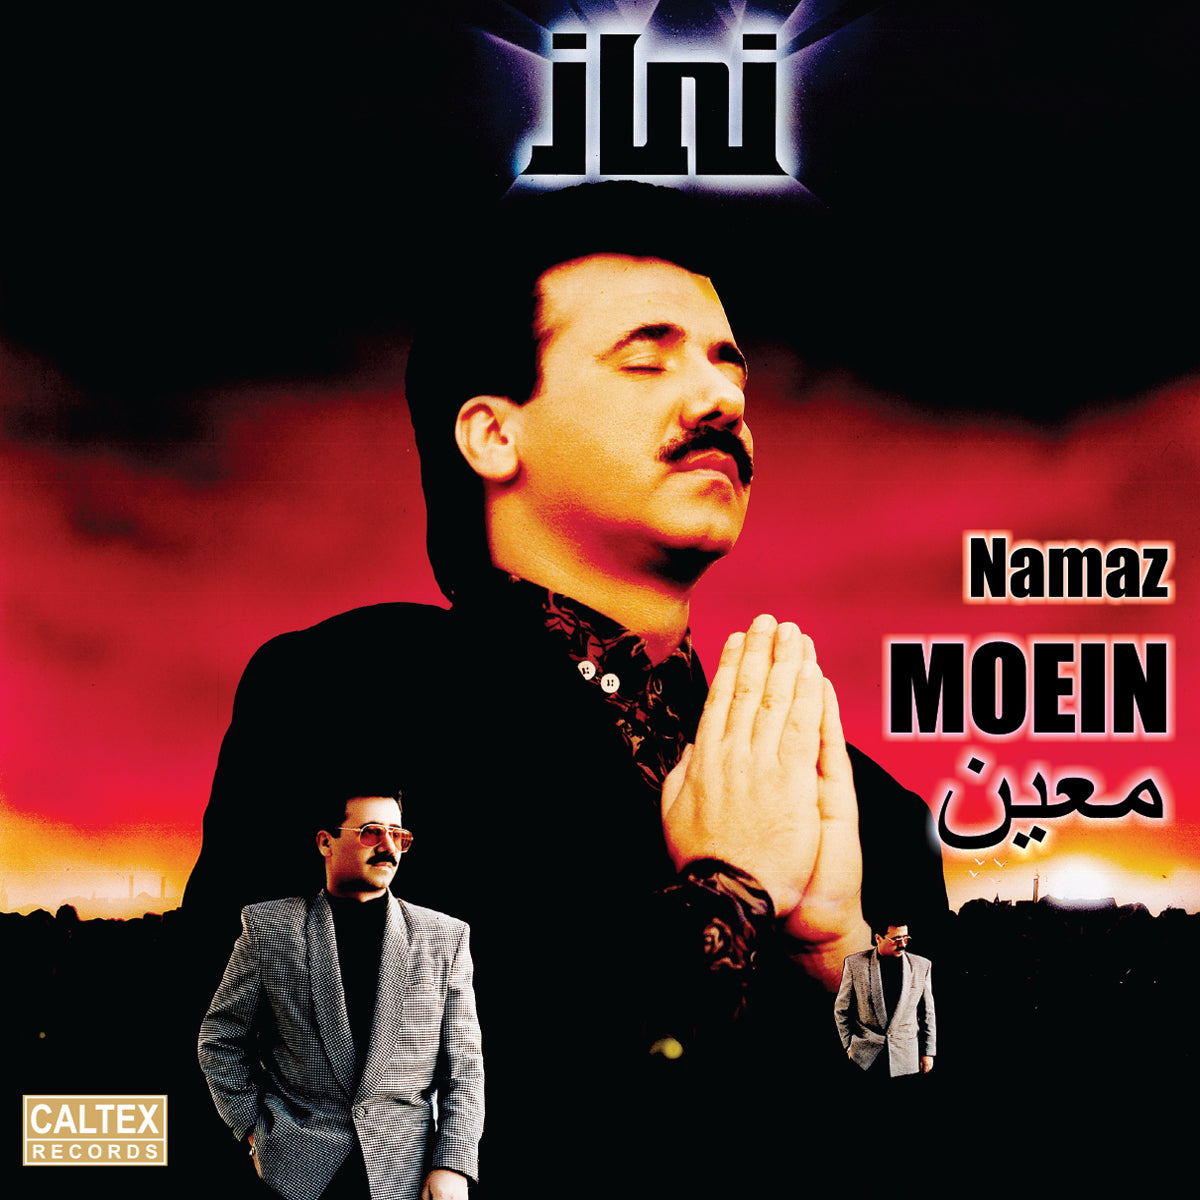 Moein - Namaz (Vinyl)